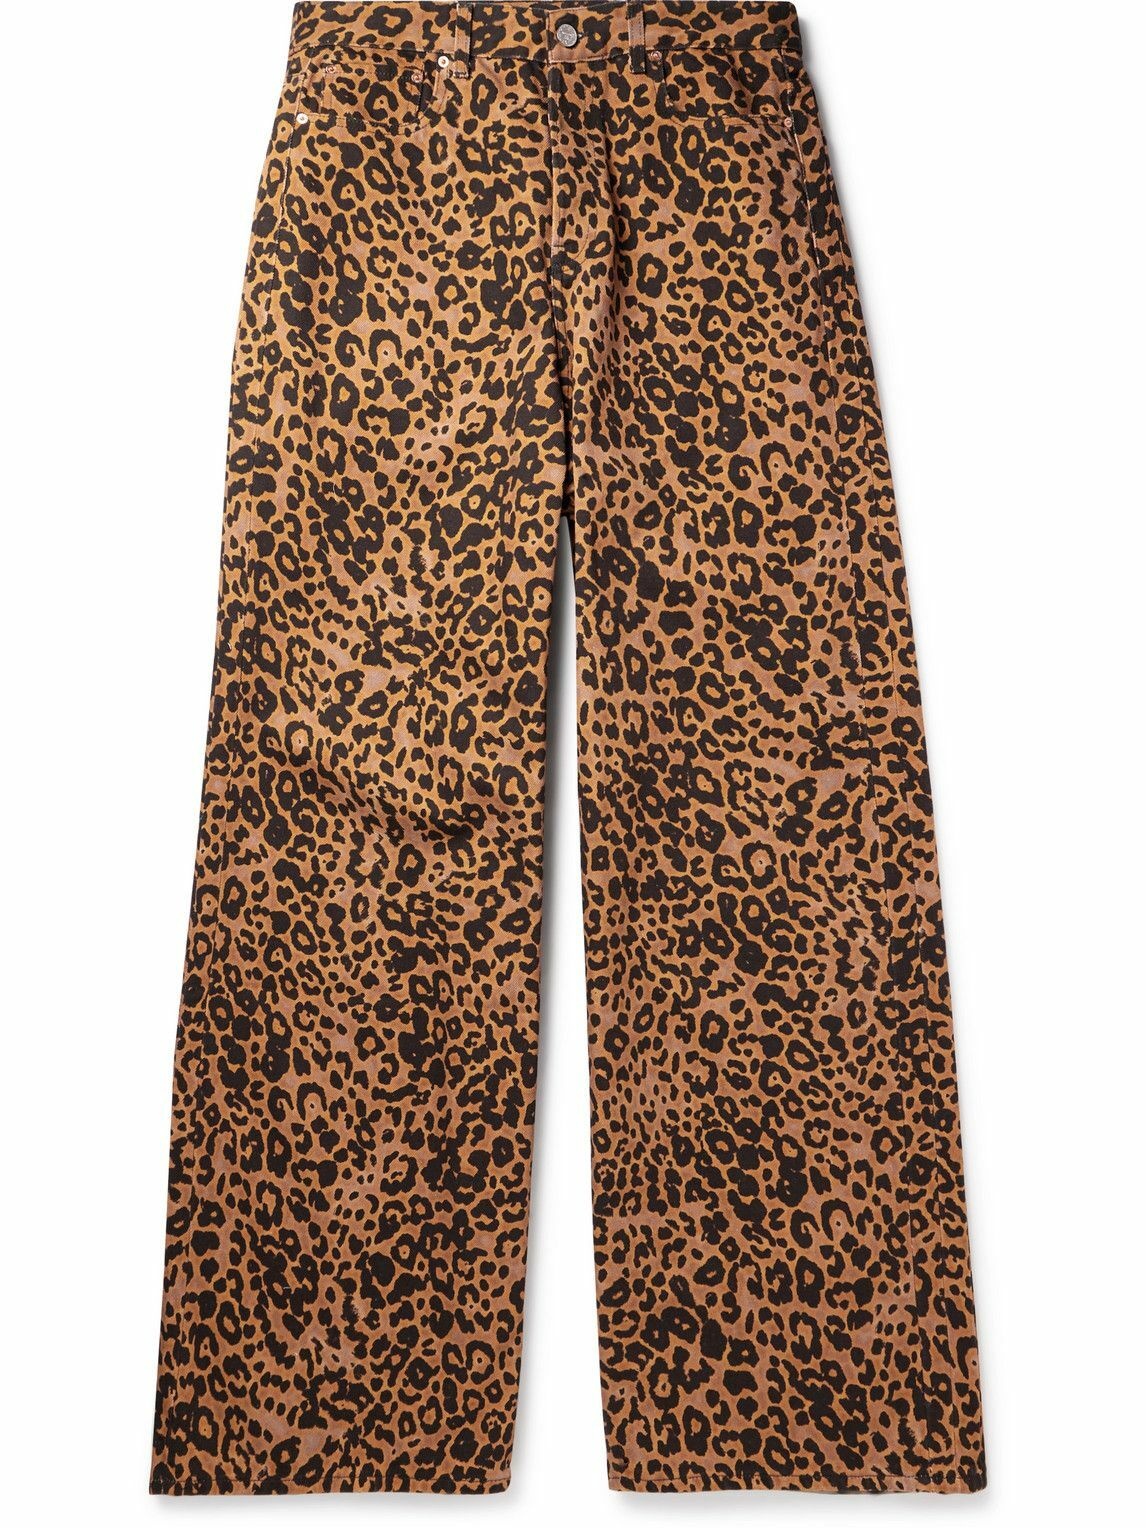 VETEMENTS - Wide-Leg Leopard-Print Jeans - Animal print Vetements